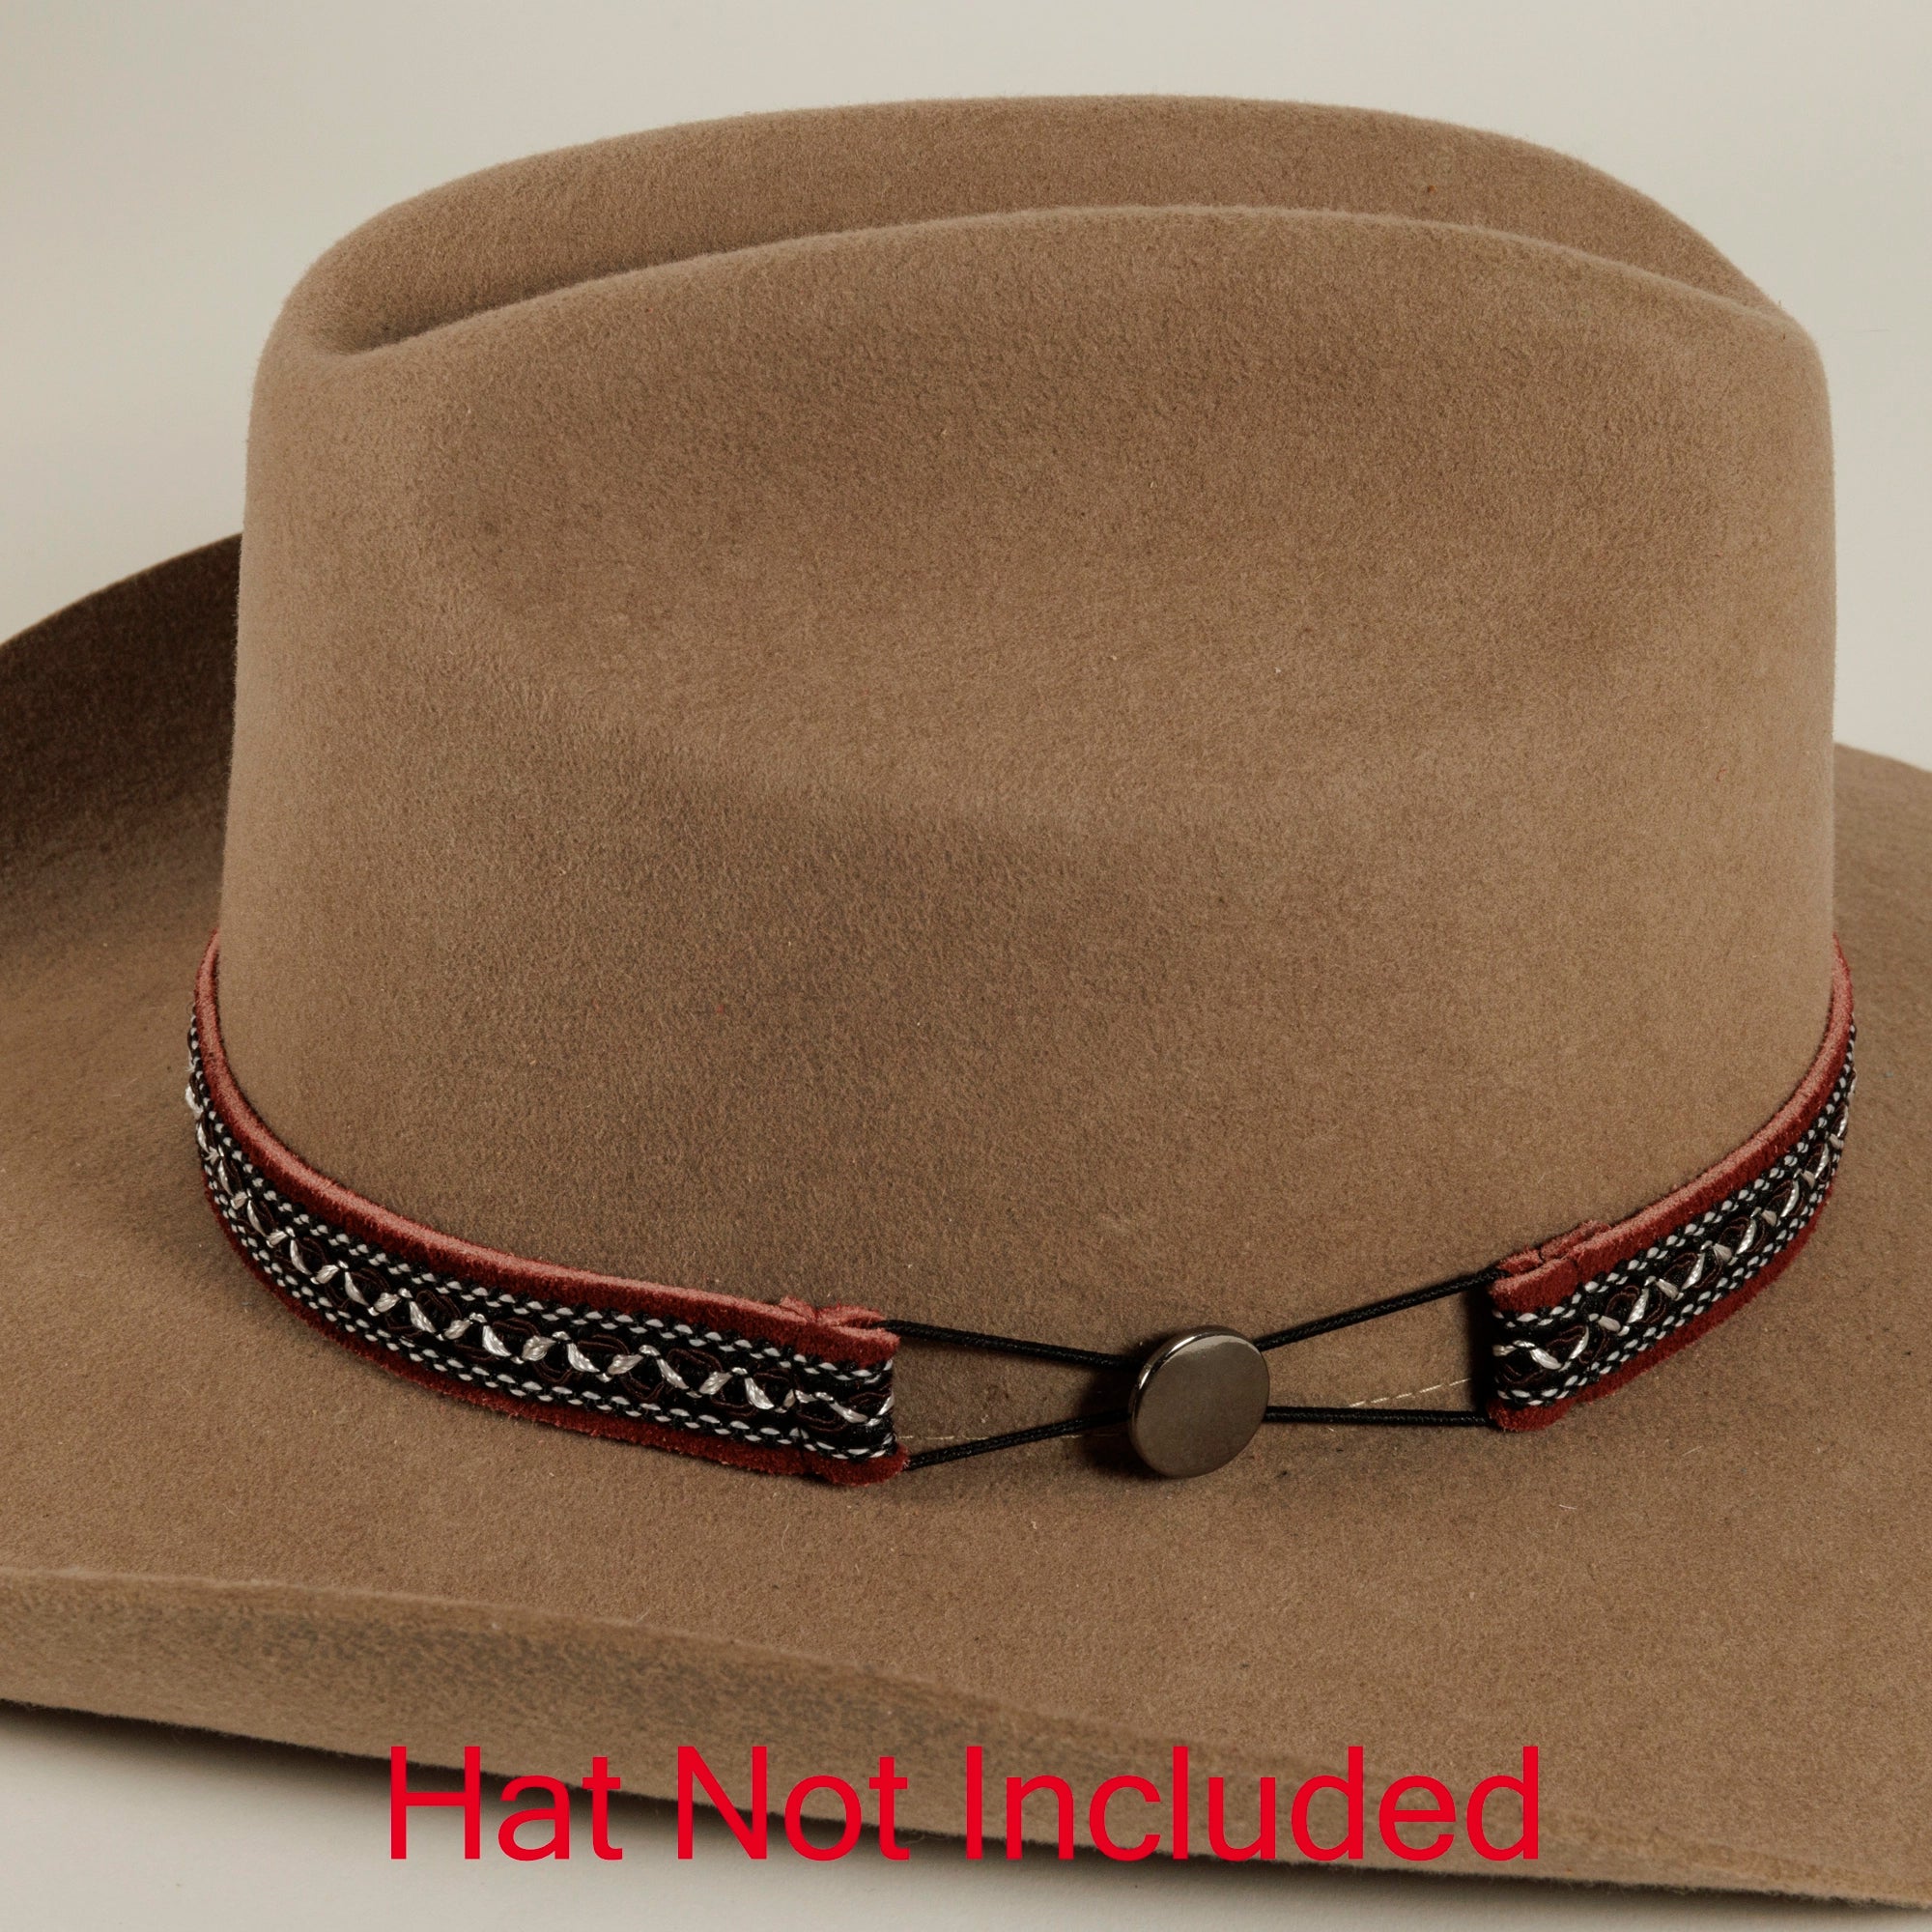 Azle Hatband on a brown hat